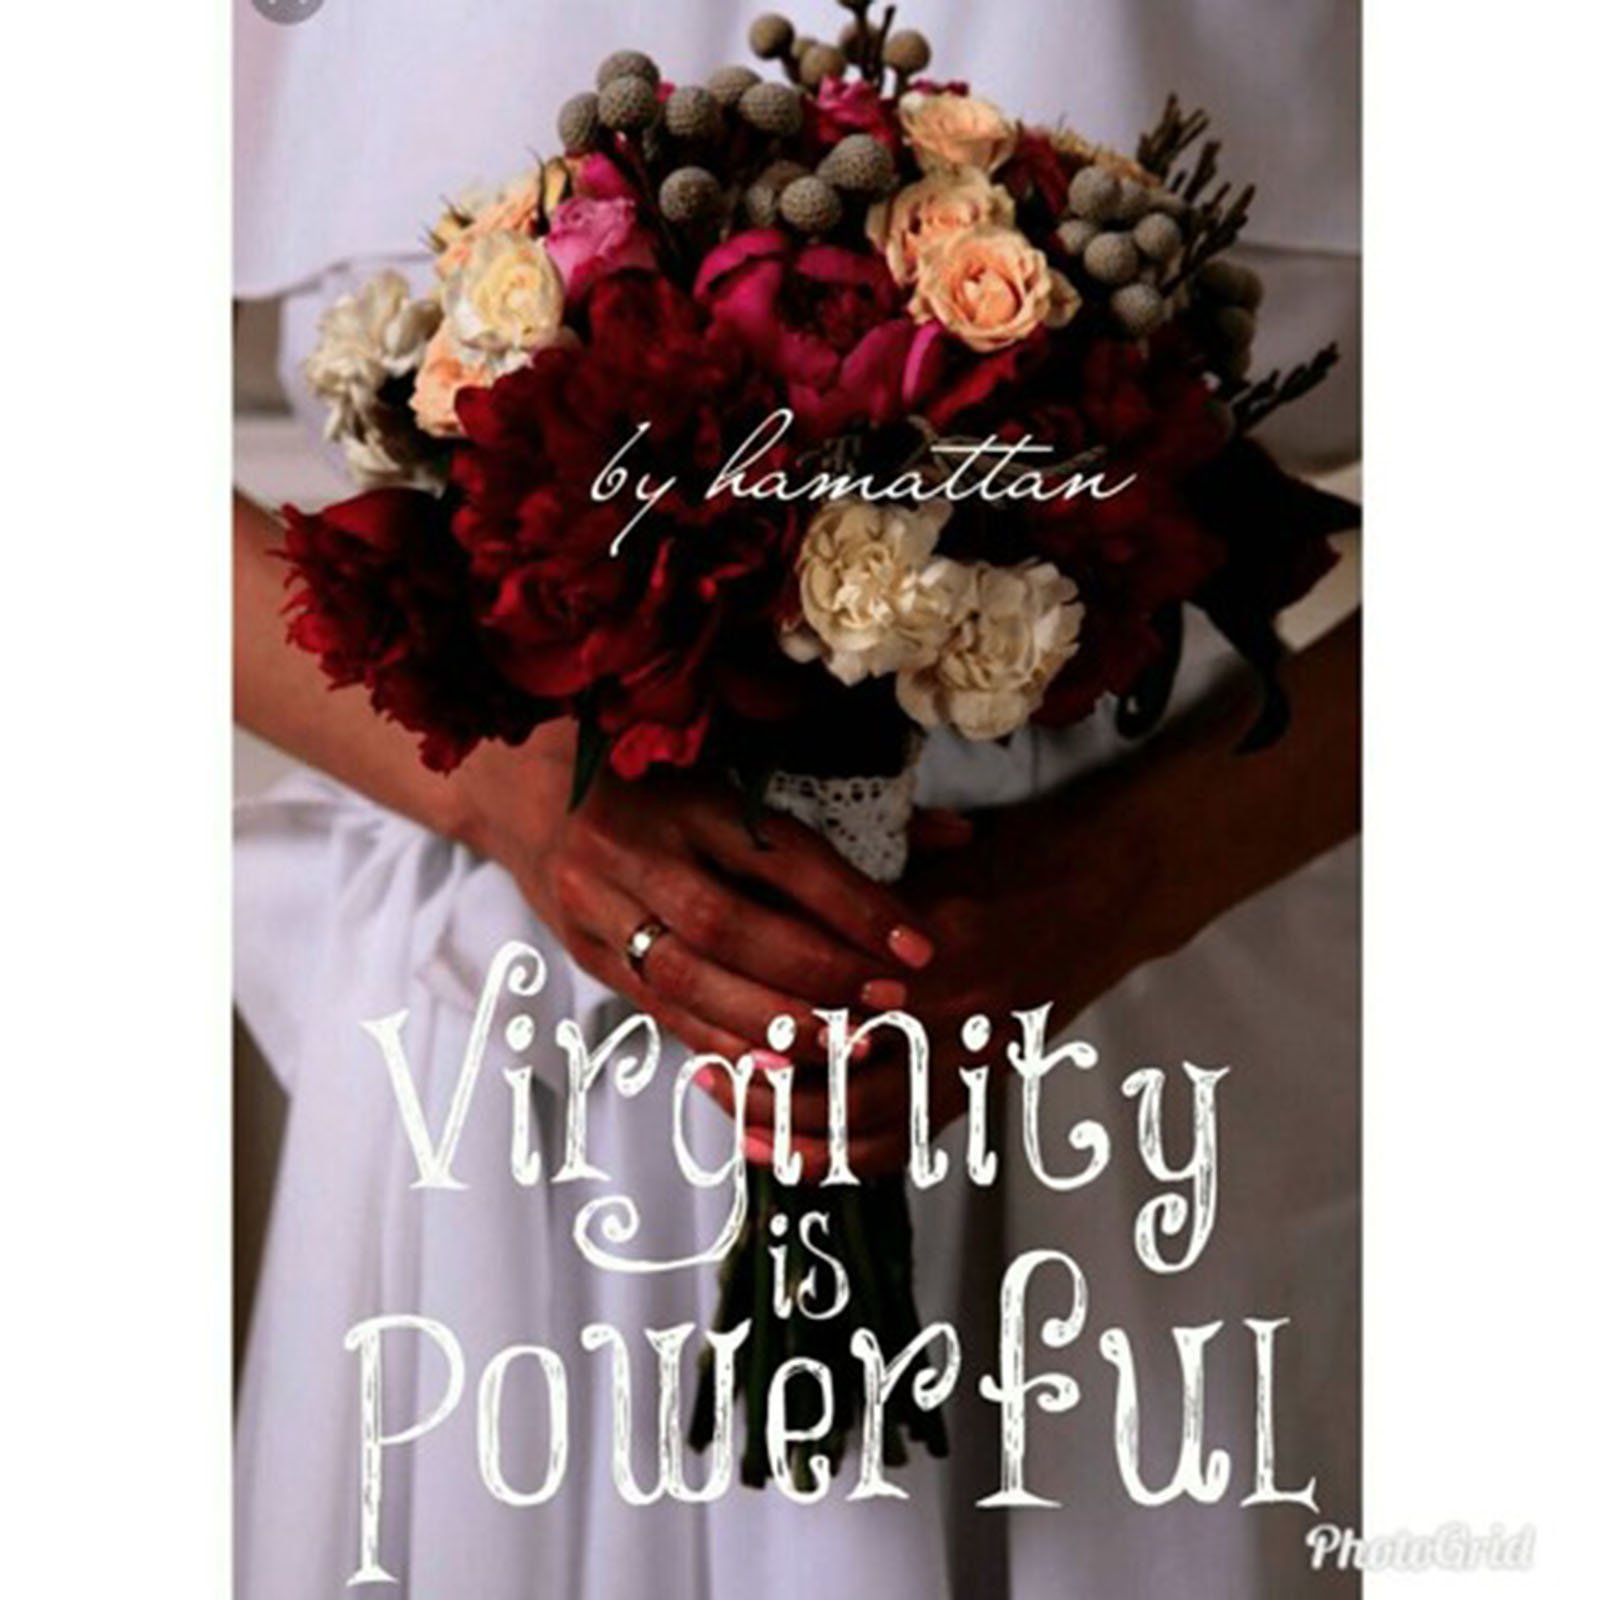 Virginity Is Powerful by Harmattan